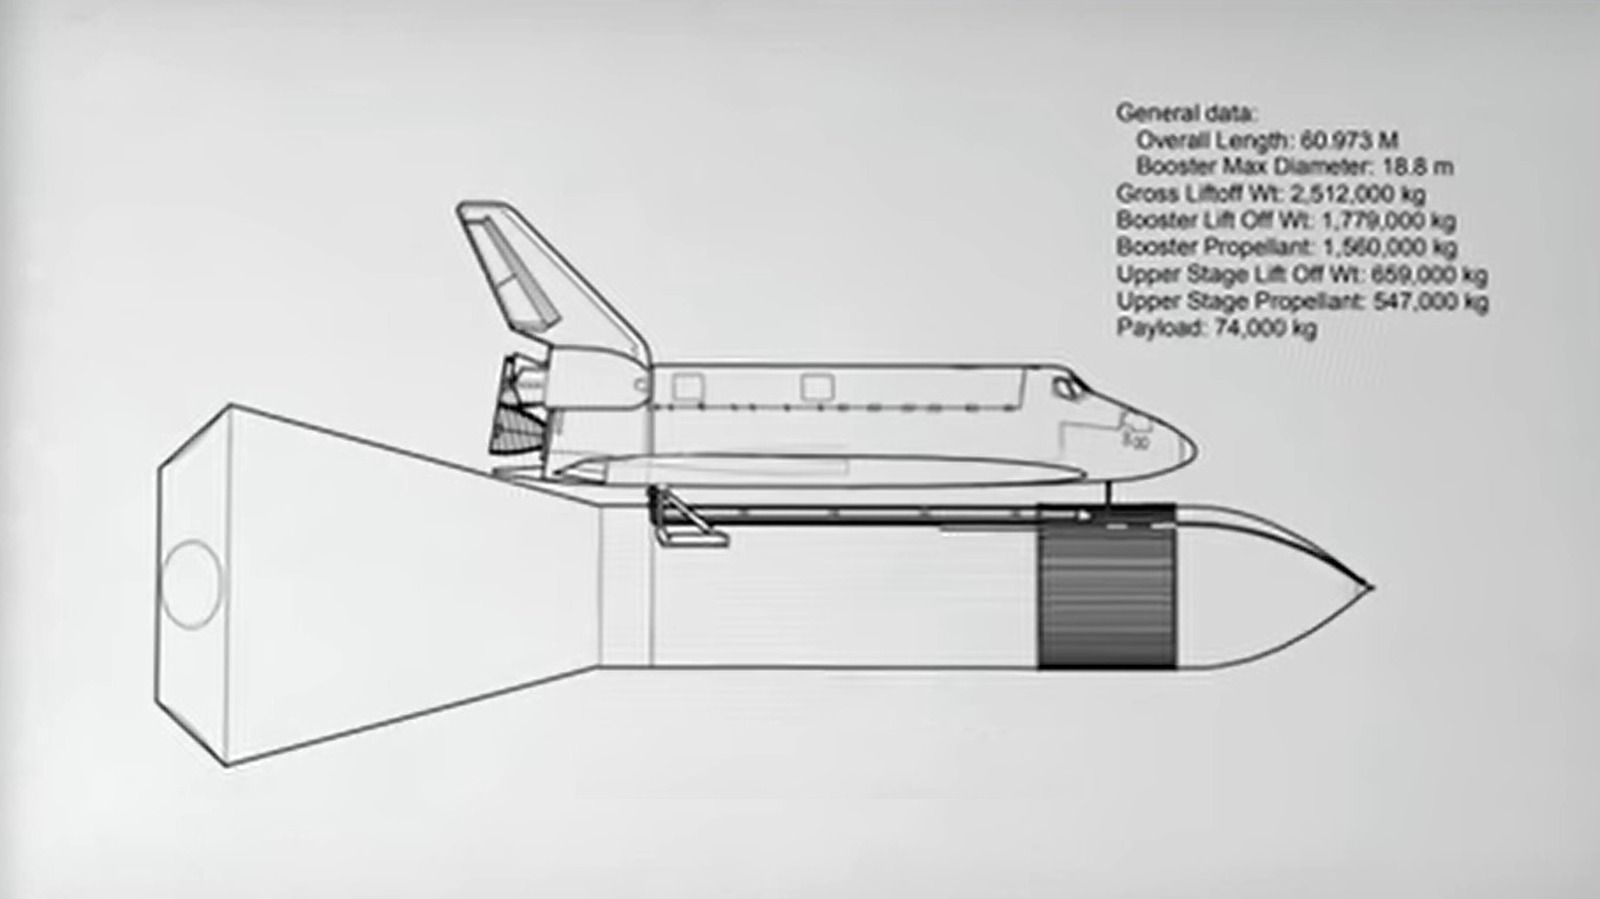 nasa new space shuttle design